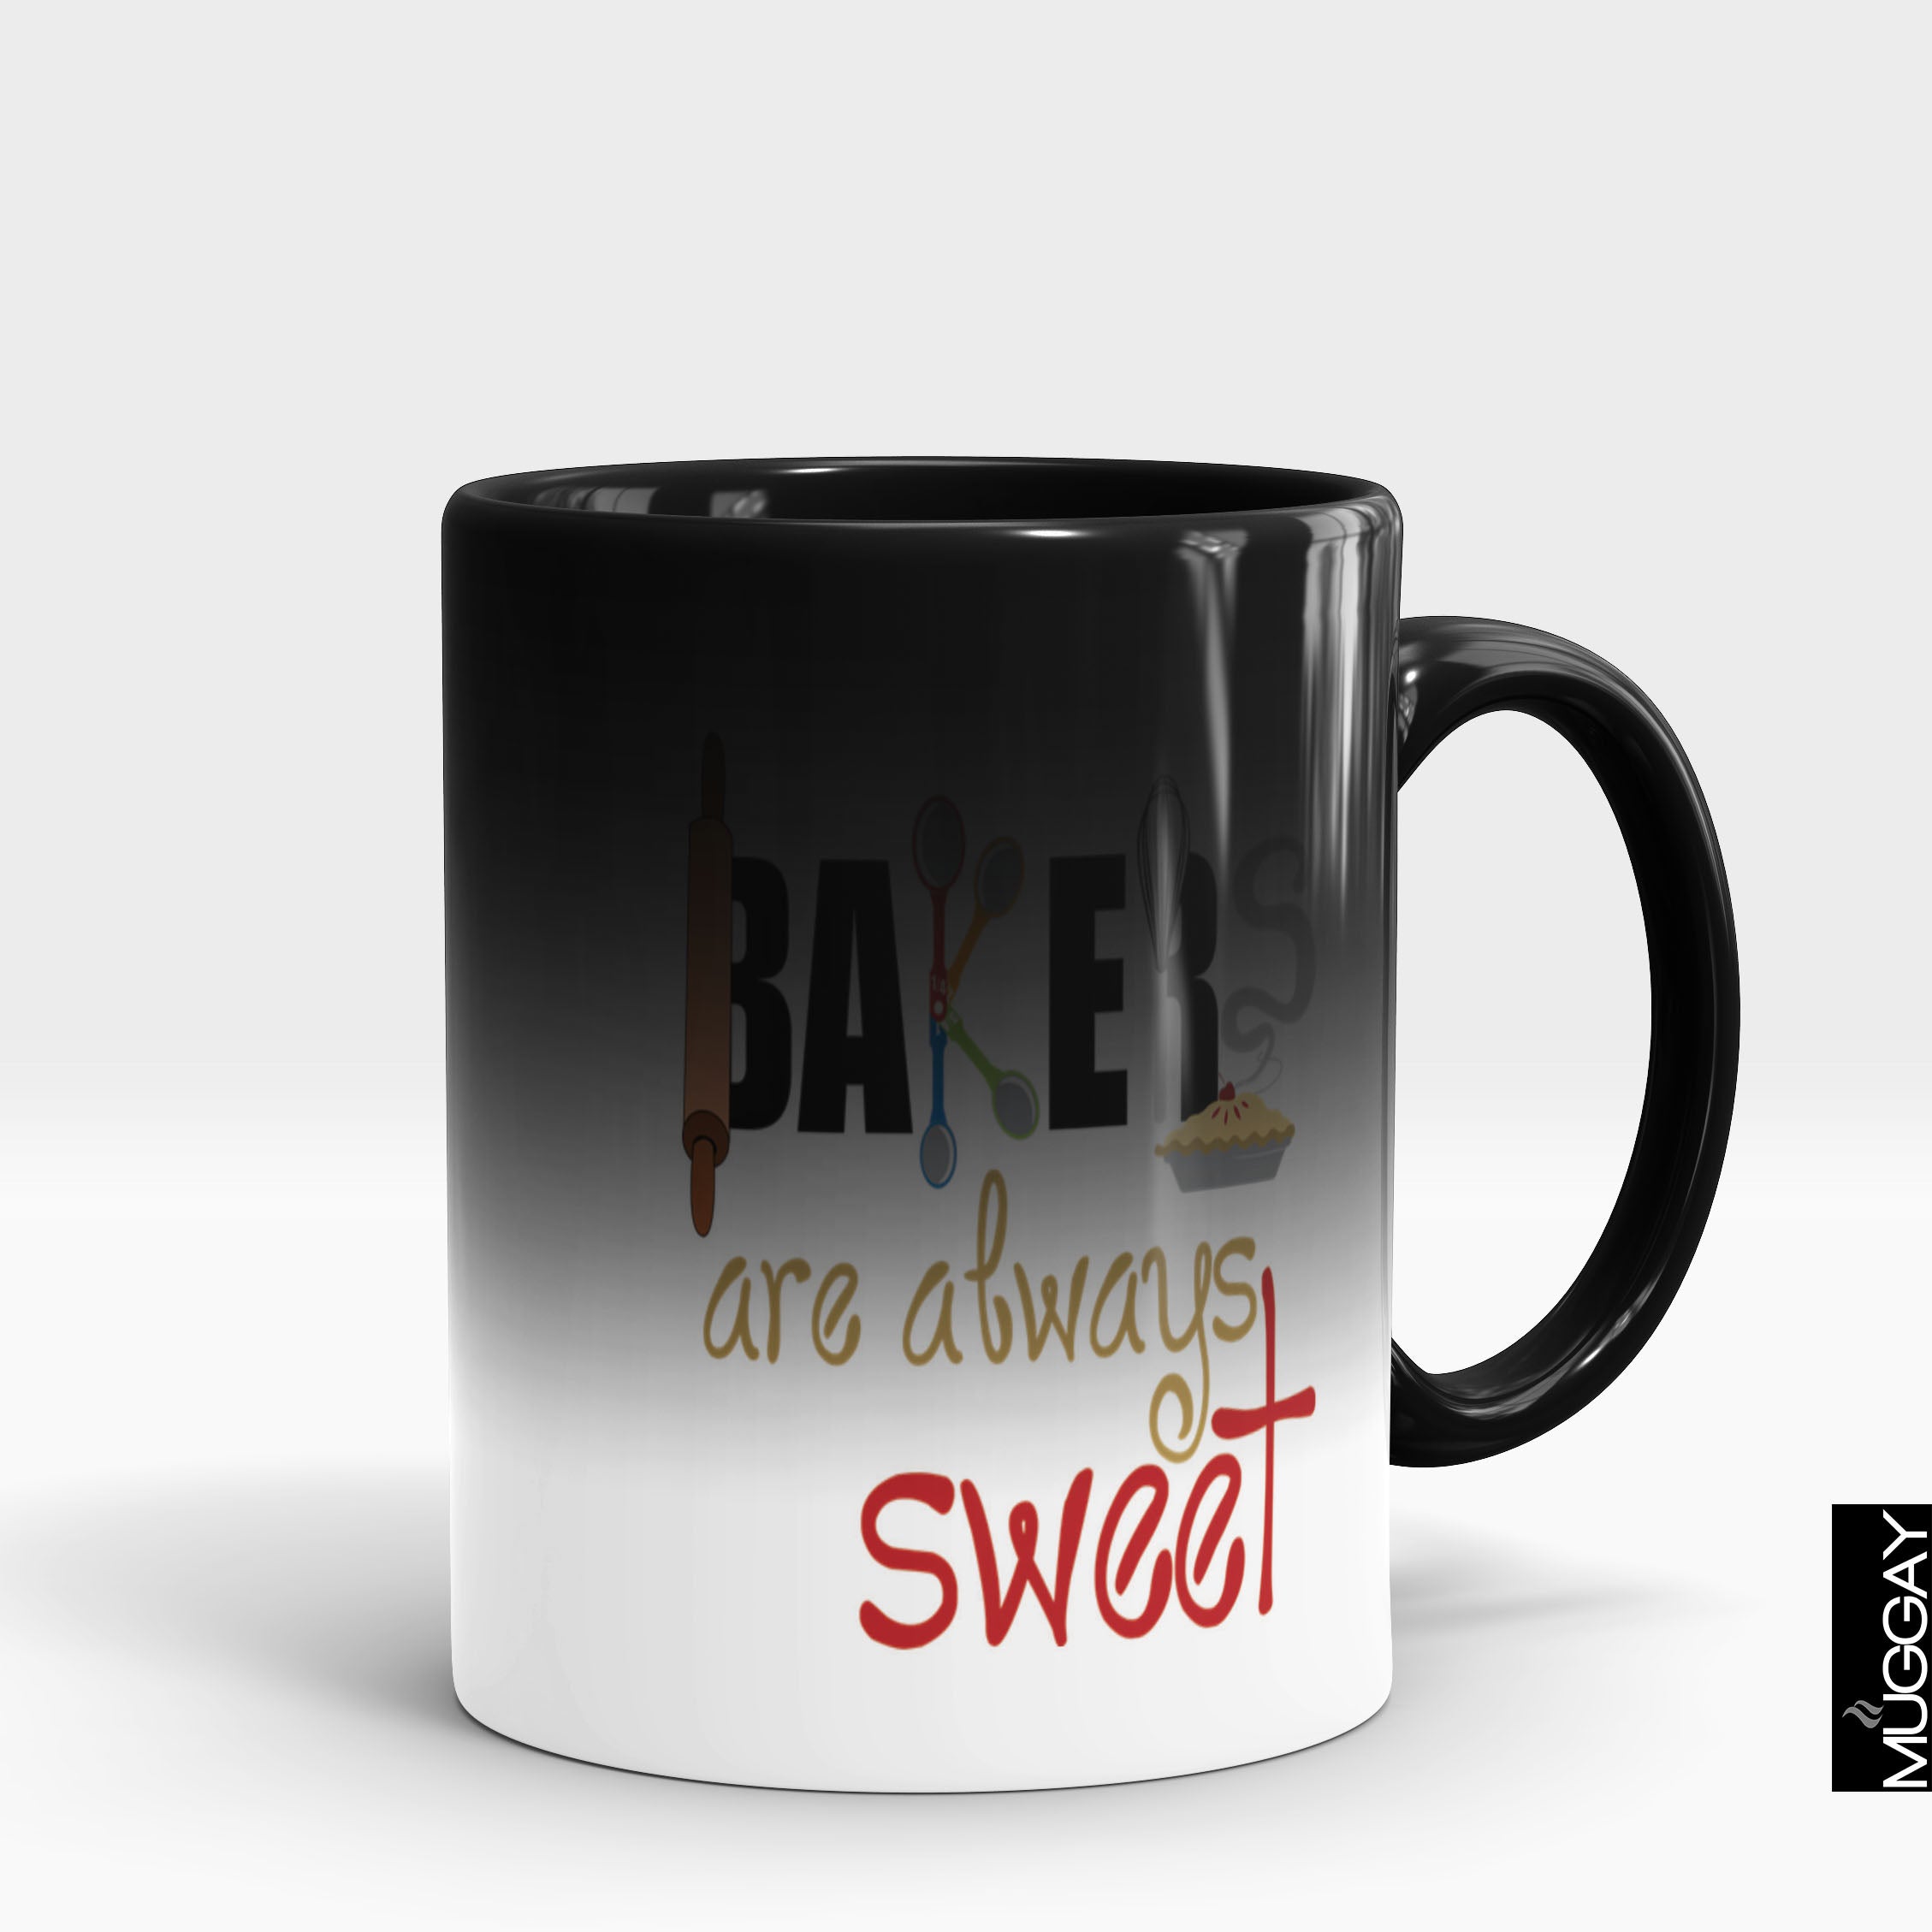 Baking Mug - bkr8 - Muggay.com - Mugs - Printing shop - truck Art mugs - Mug printing - Customized printing - Digital printing - Muggay 